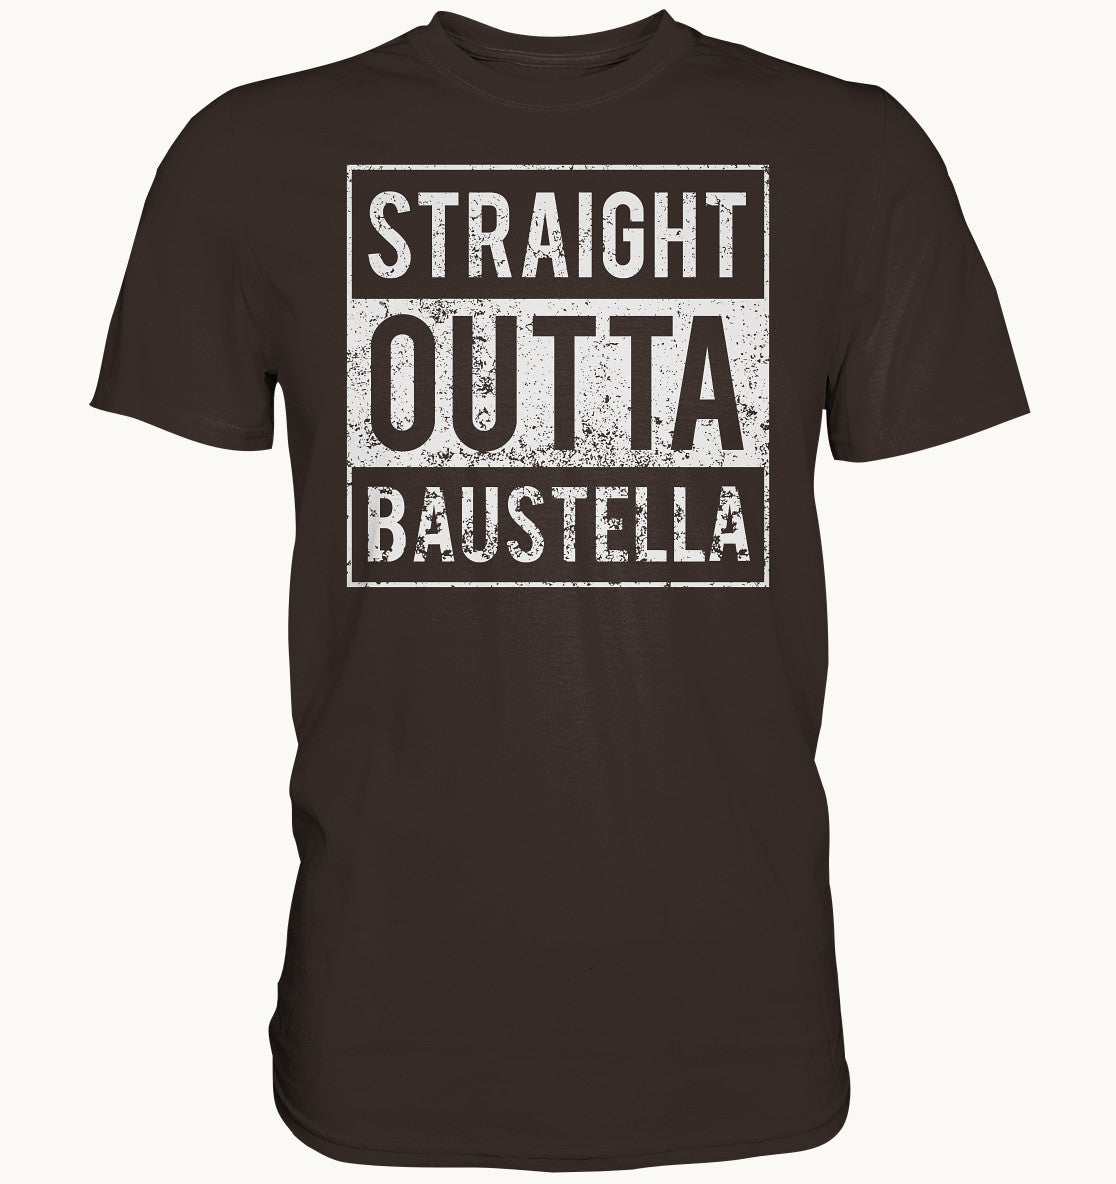 Straight outta Baustella - Premium Shirt